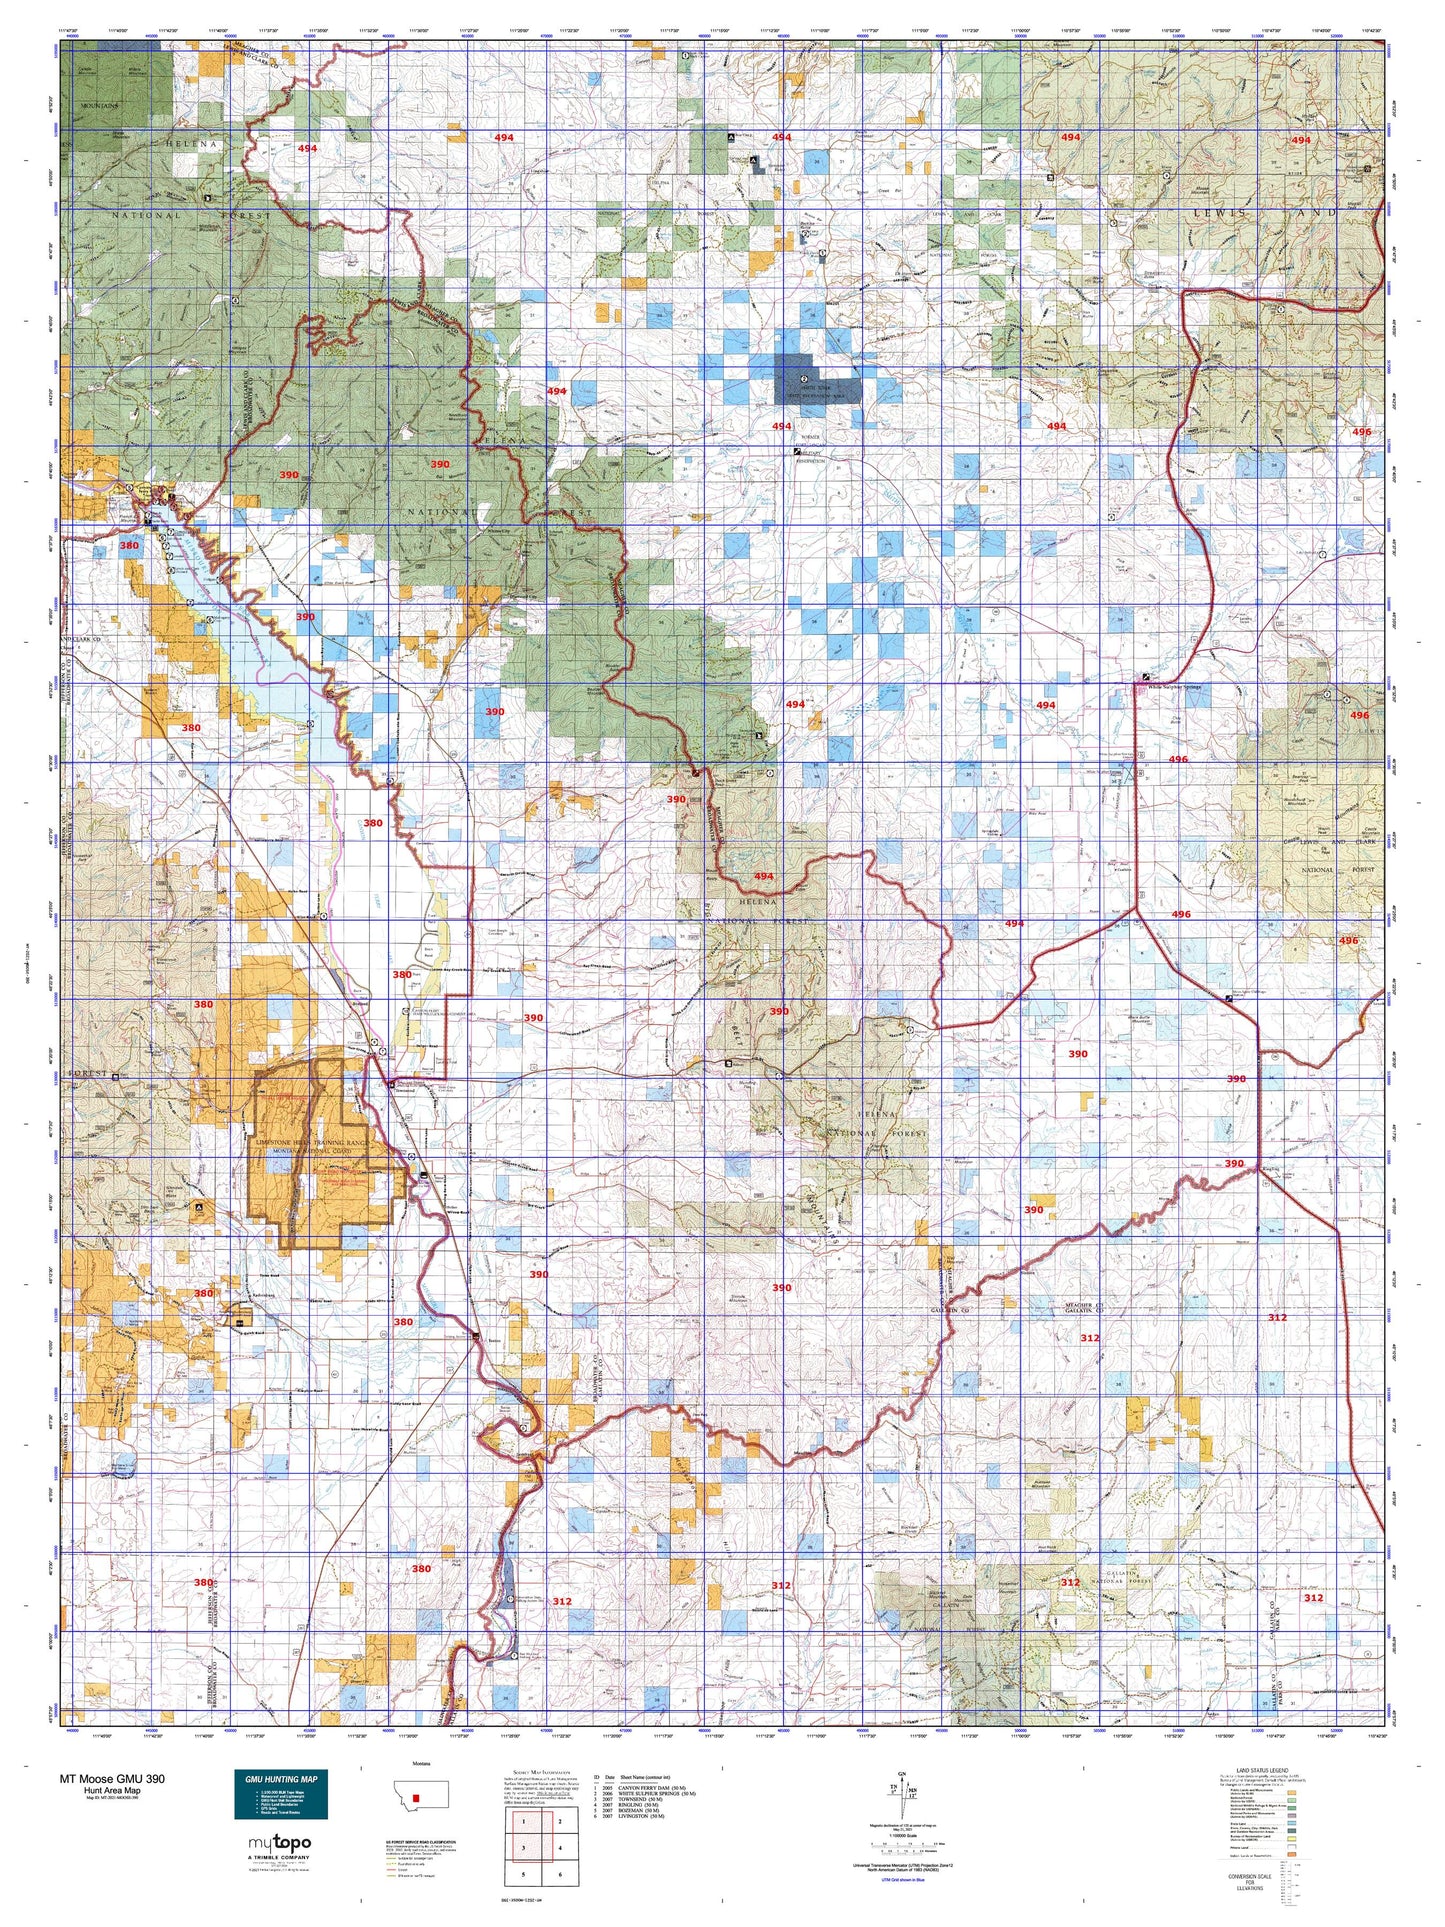 Montana Moose GMU 390 Map Image